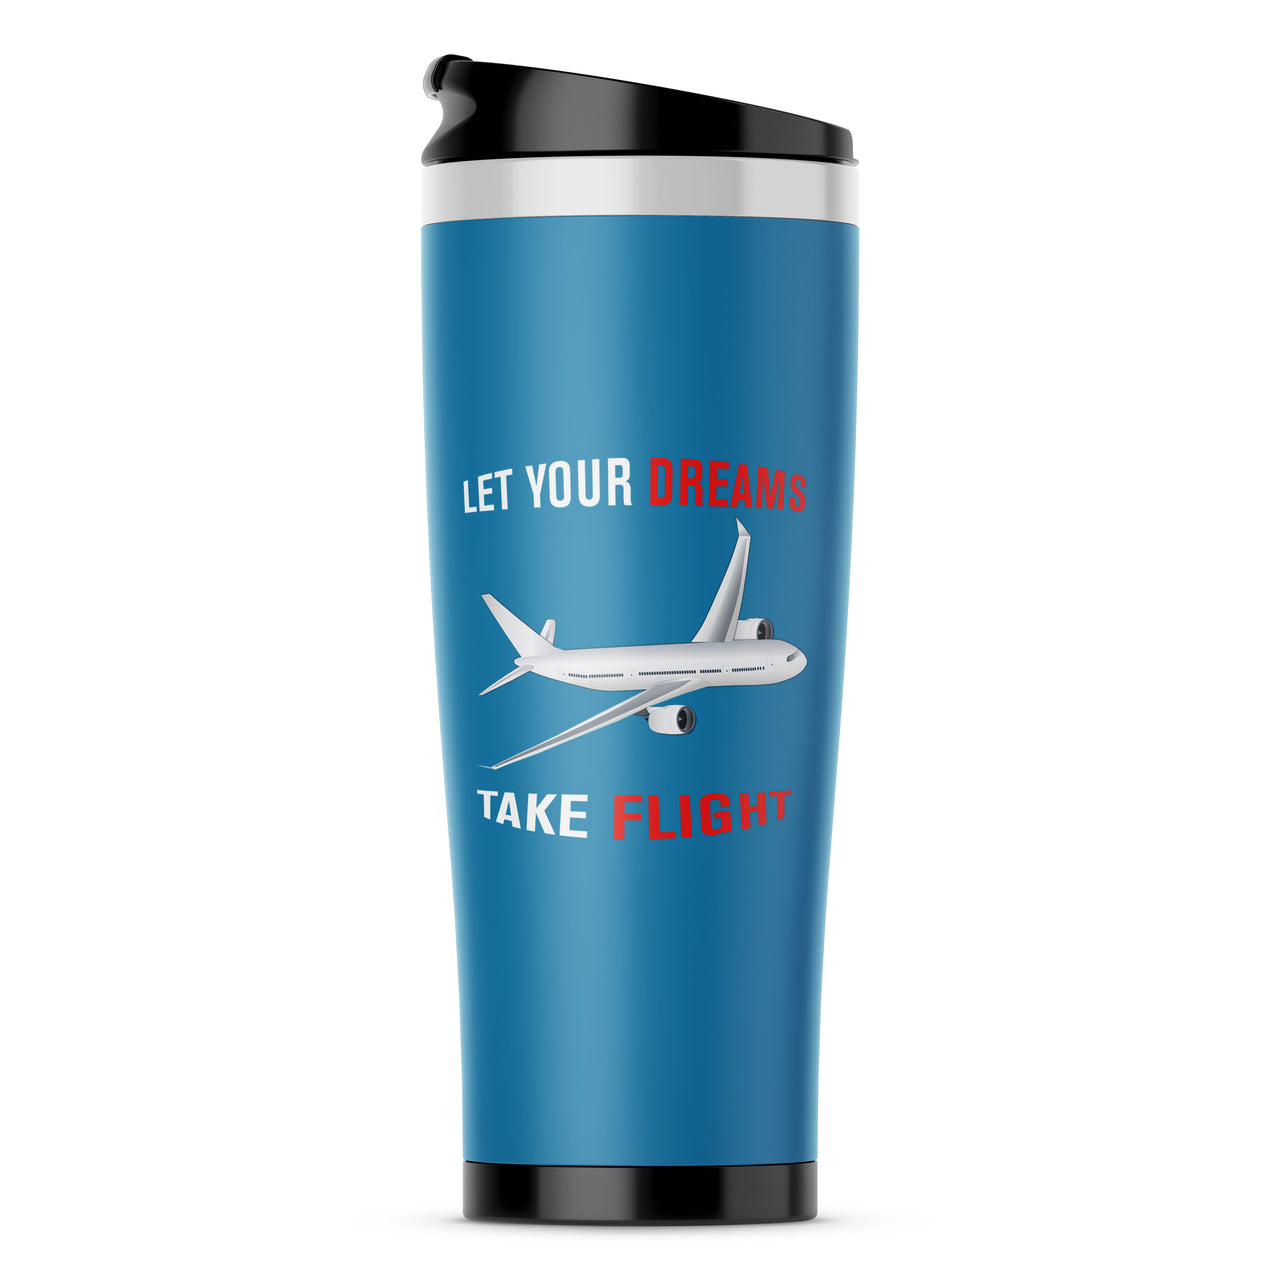 Let Your Dreams Take Flight Designed Travel Mugs